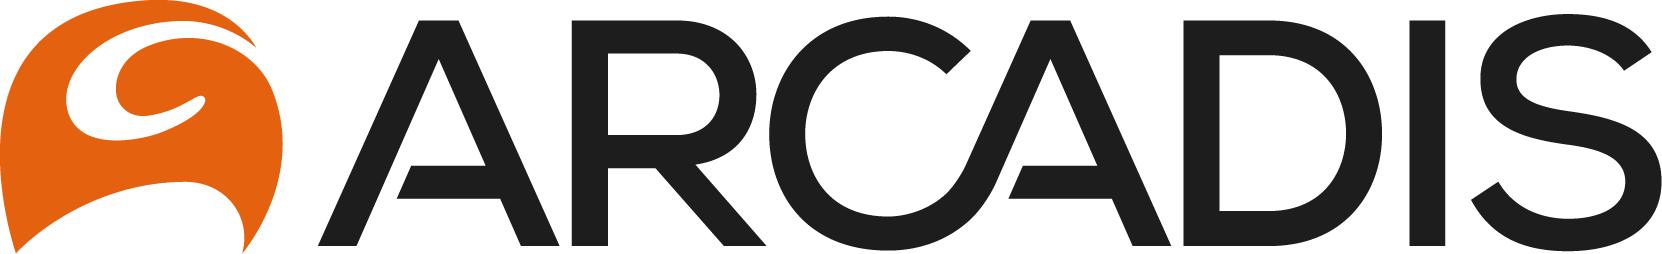 Arcadis logo large (transparent PNG)